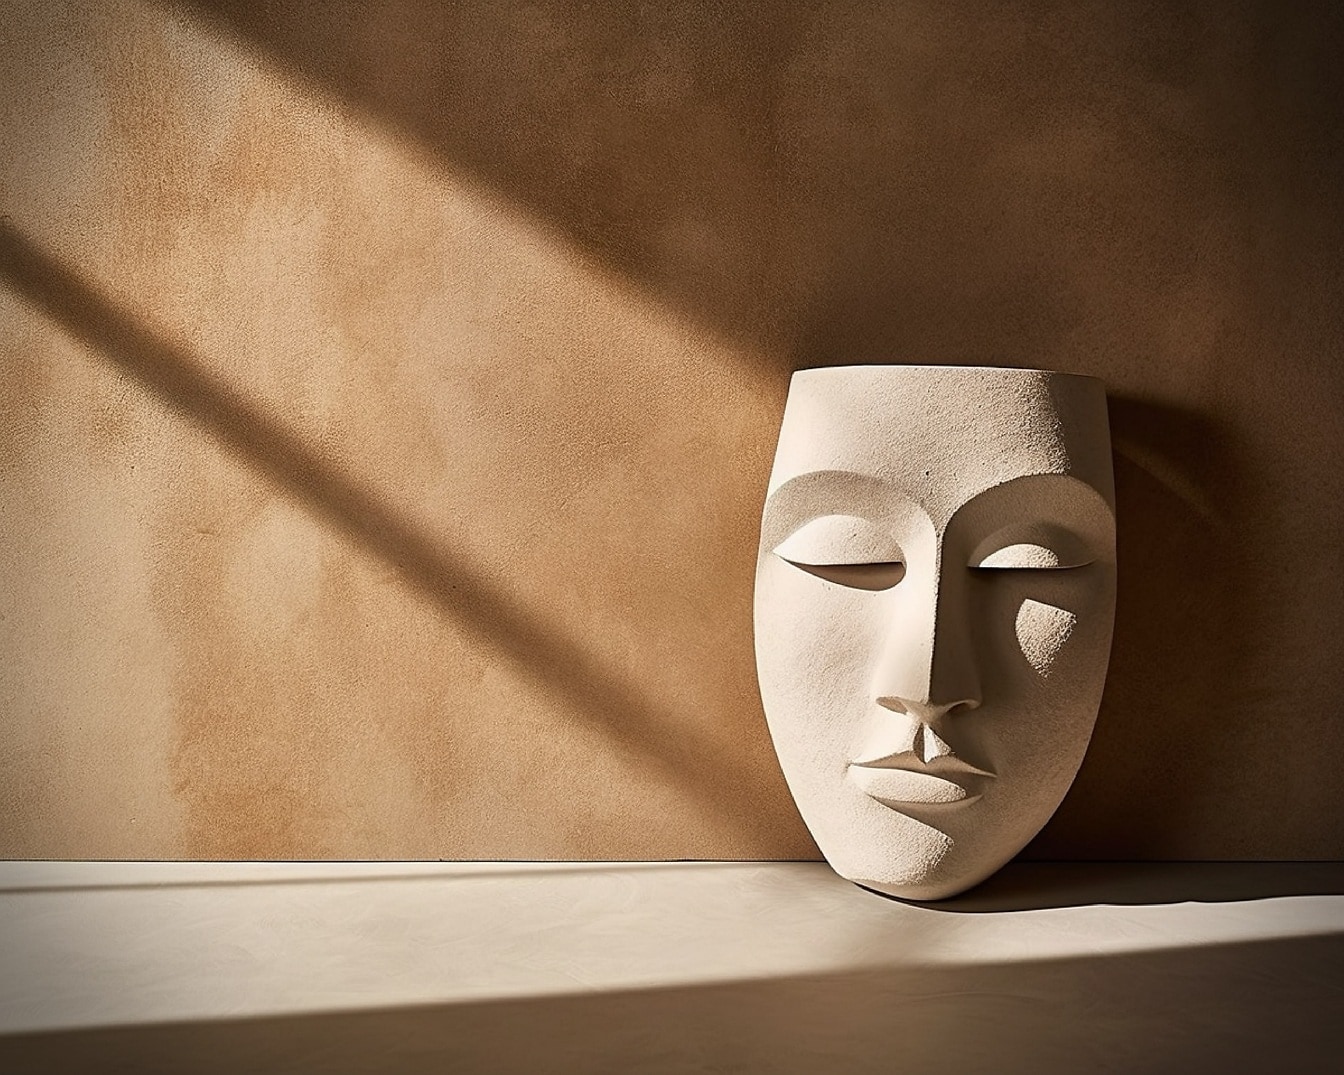 Máscara de terracota beige en sombra por pared marrón claro